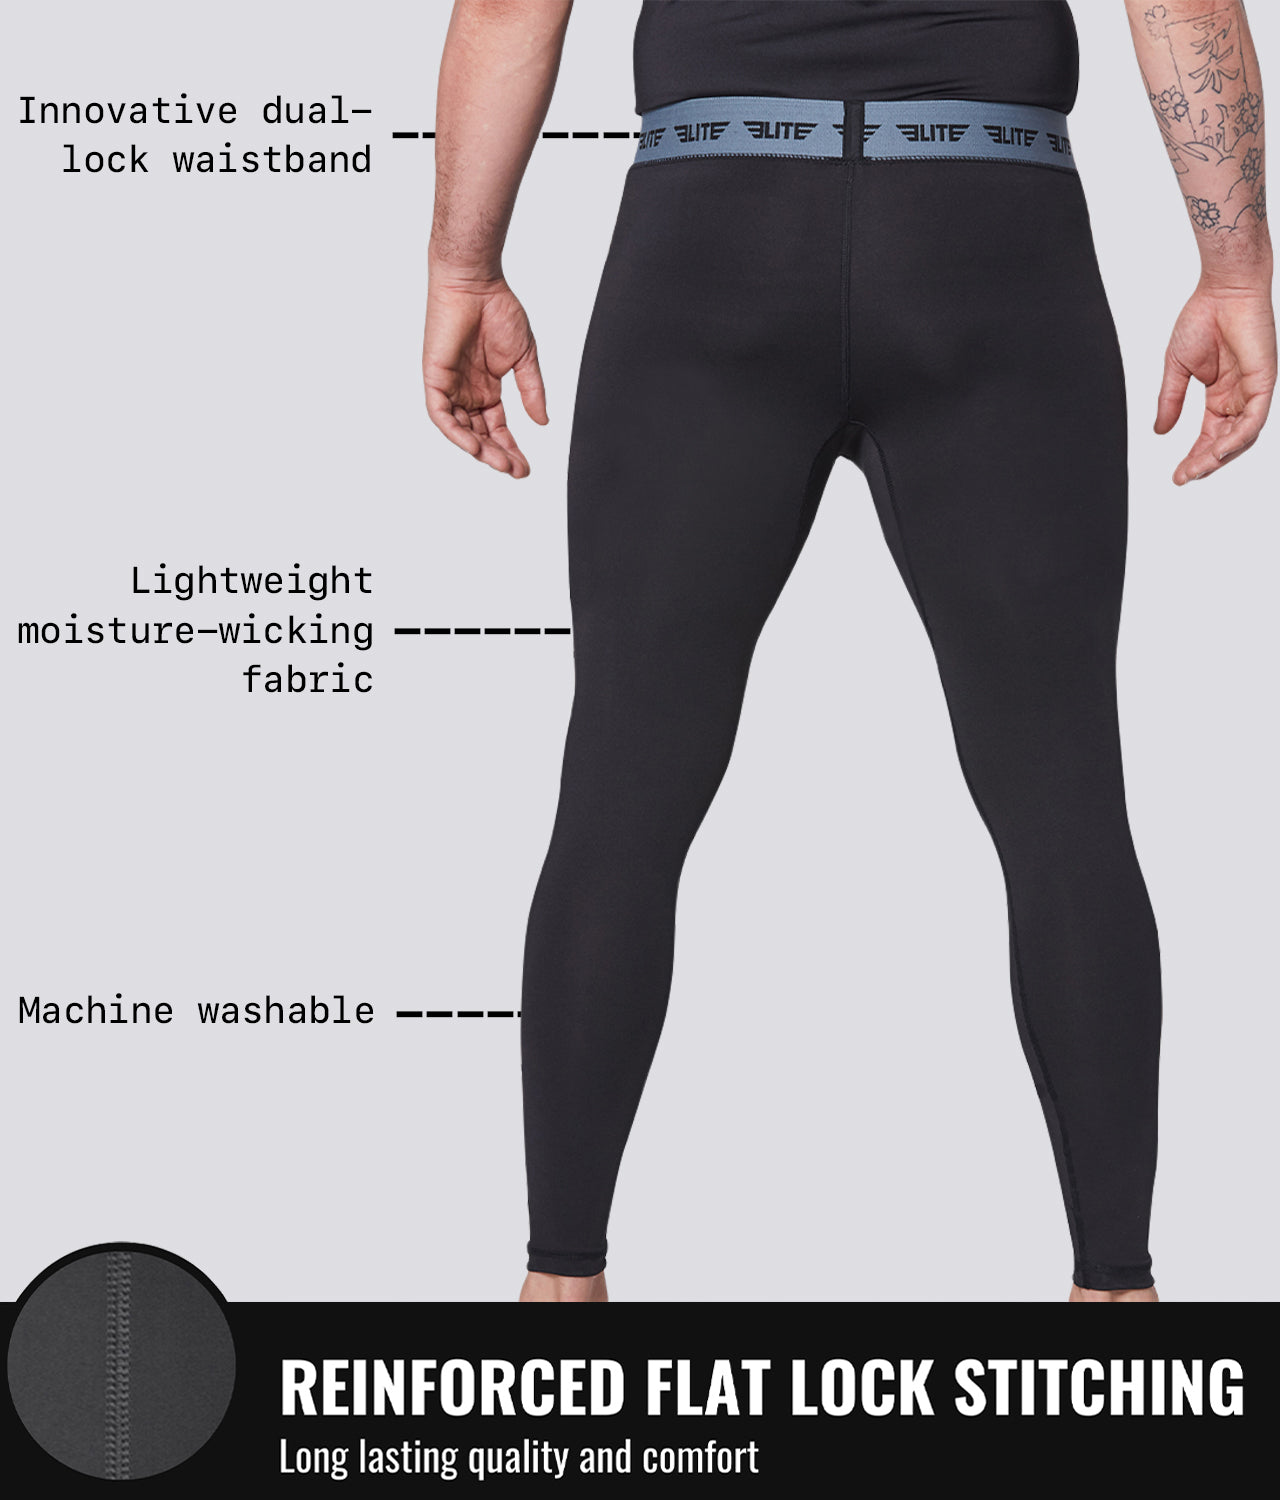 Elite Sports Men's Plain Black Compression Boxing Spat Pants Reinforced Flat Lock Stitching